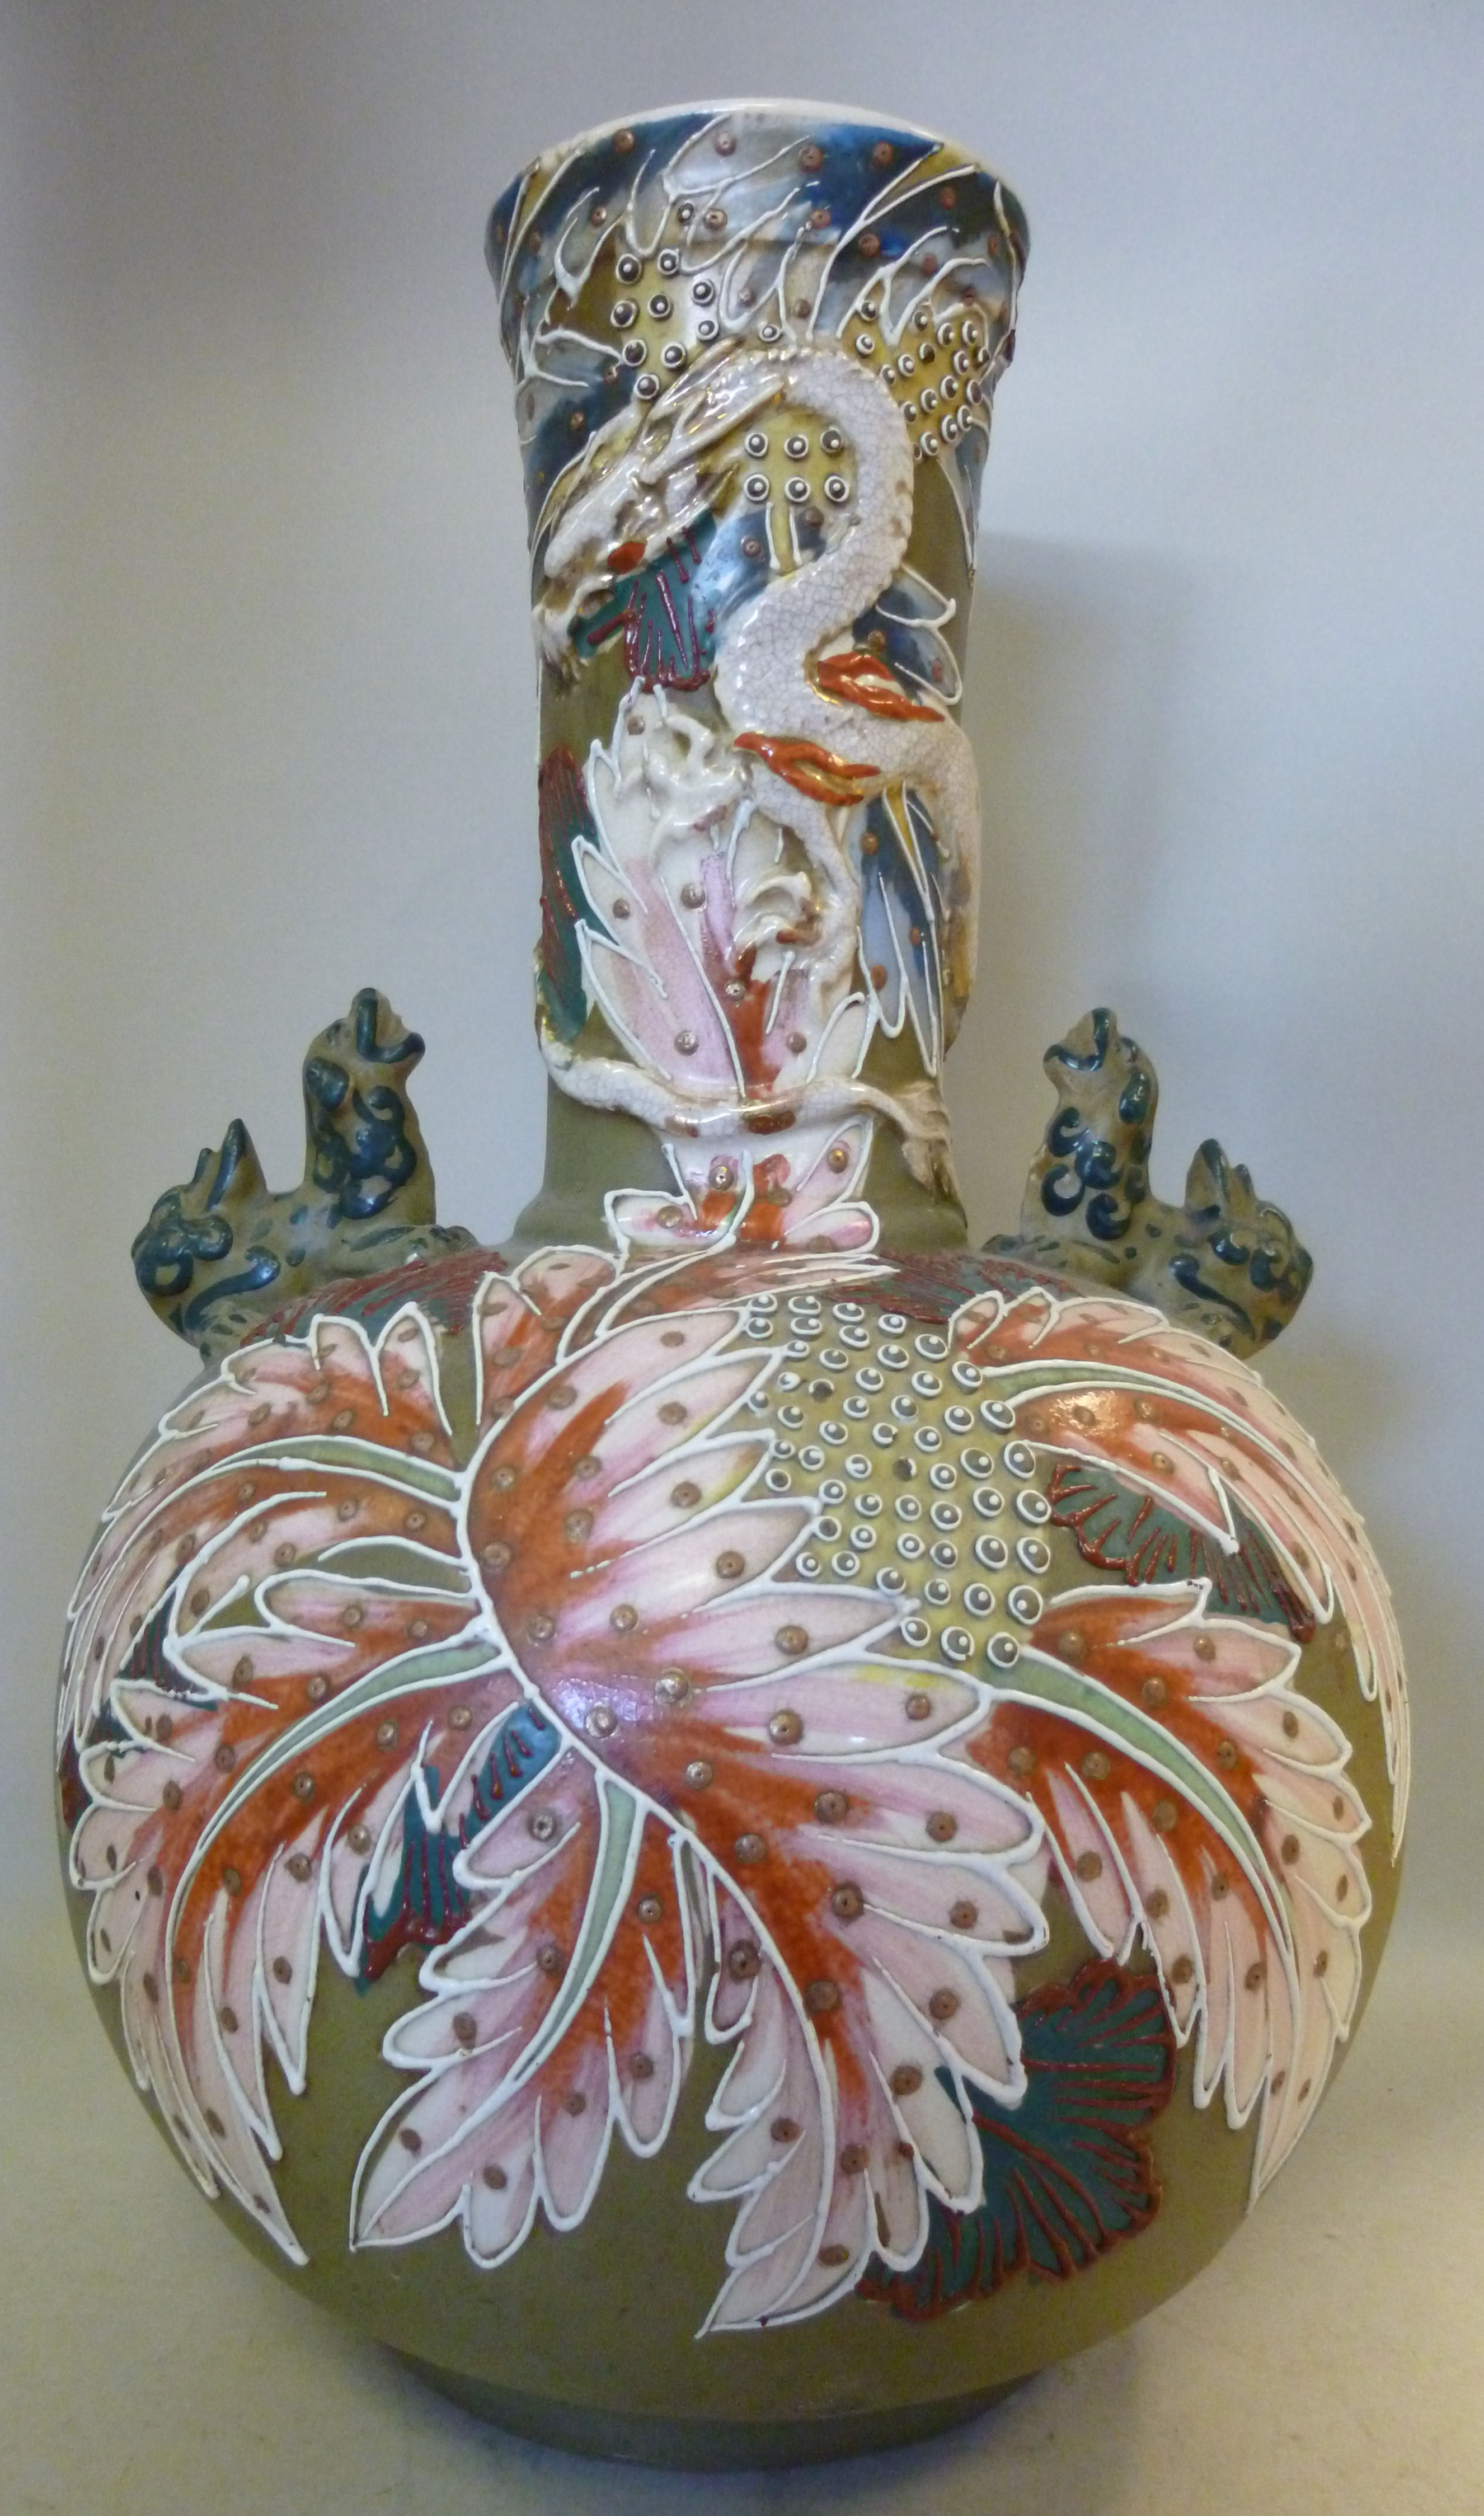 An early 20thC Japanese earthenware bott